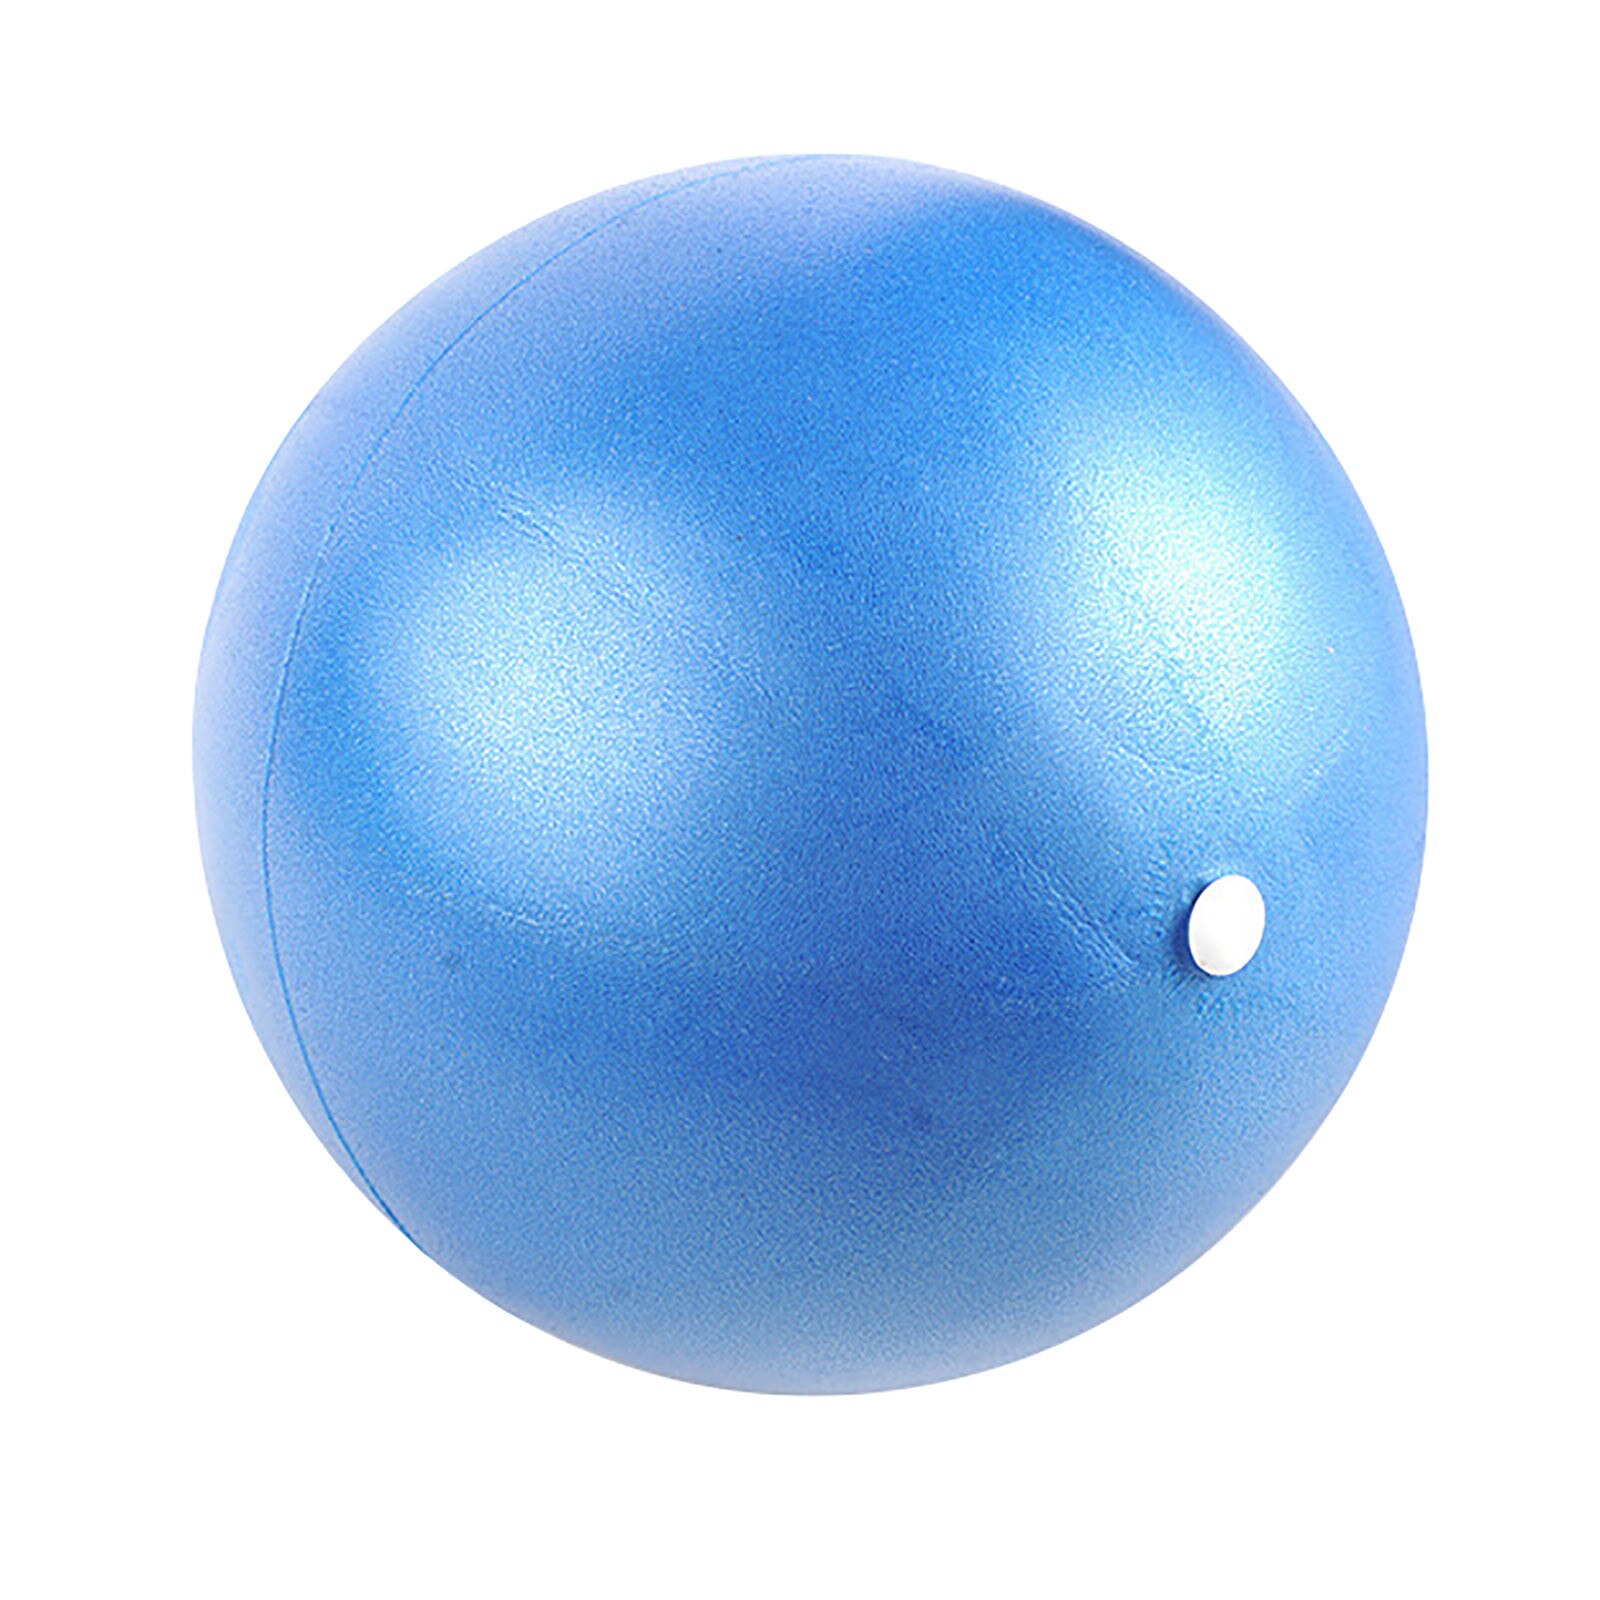 Yoga Ball Fitness for Fitness Pilates Exercise Stability Balance Ball 15cm Fitness & Yoga Equipment